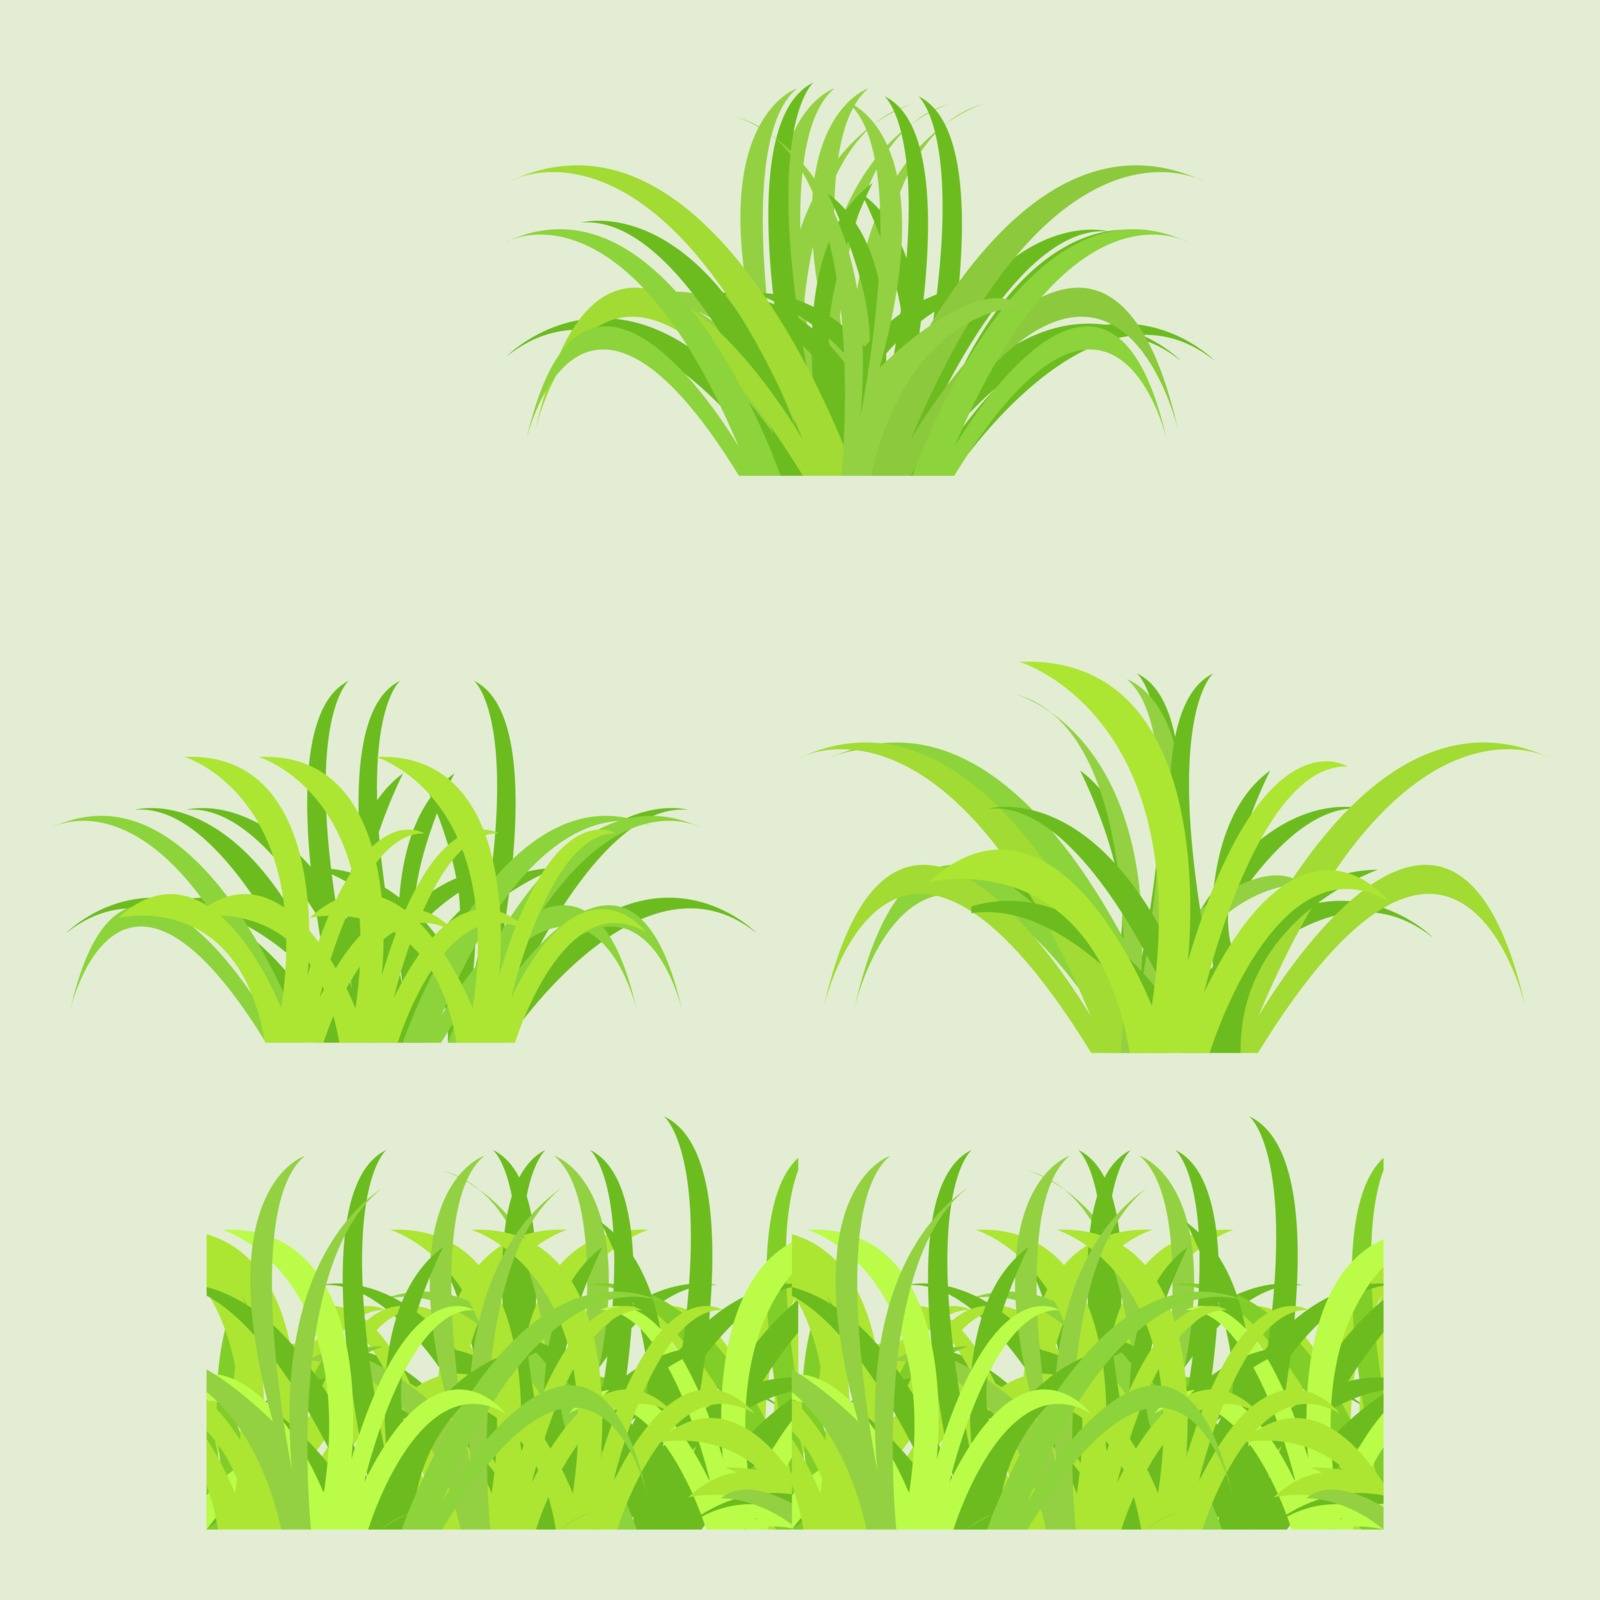 Fragment of paper green grass. Vector illustration. 